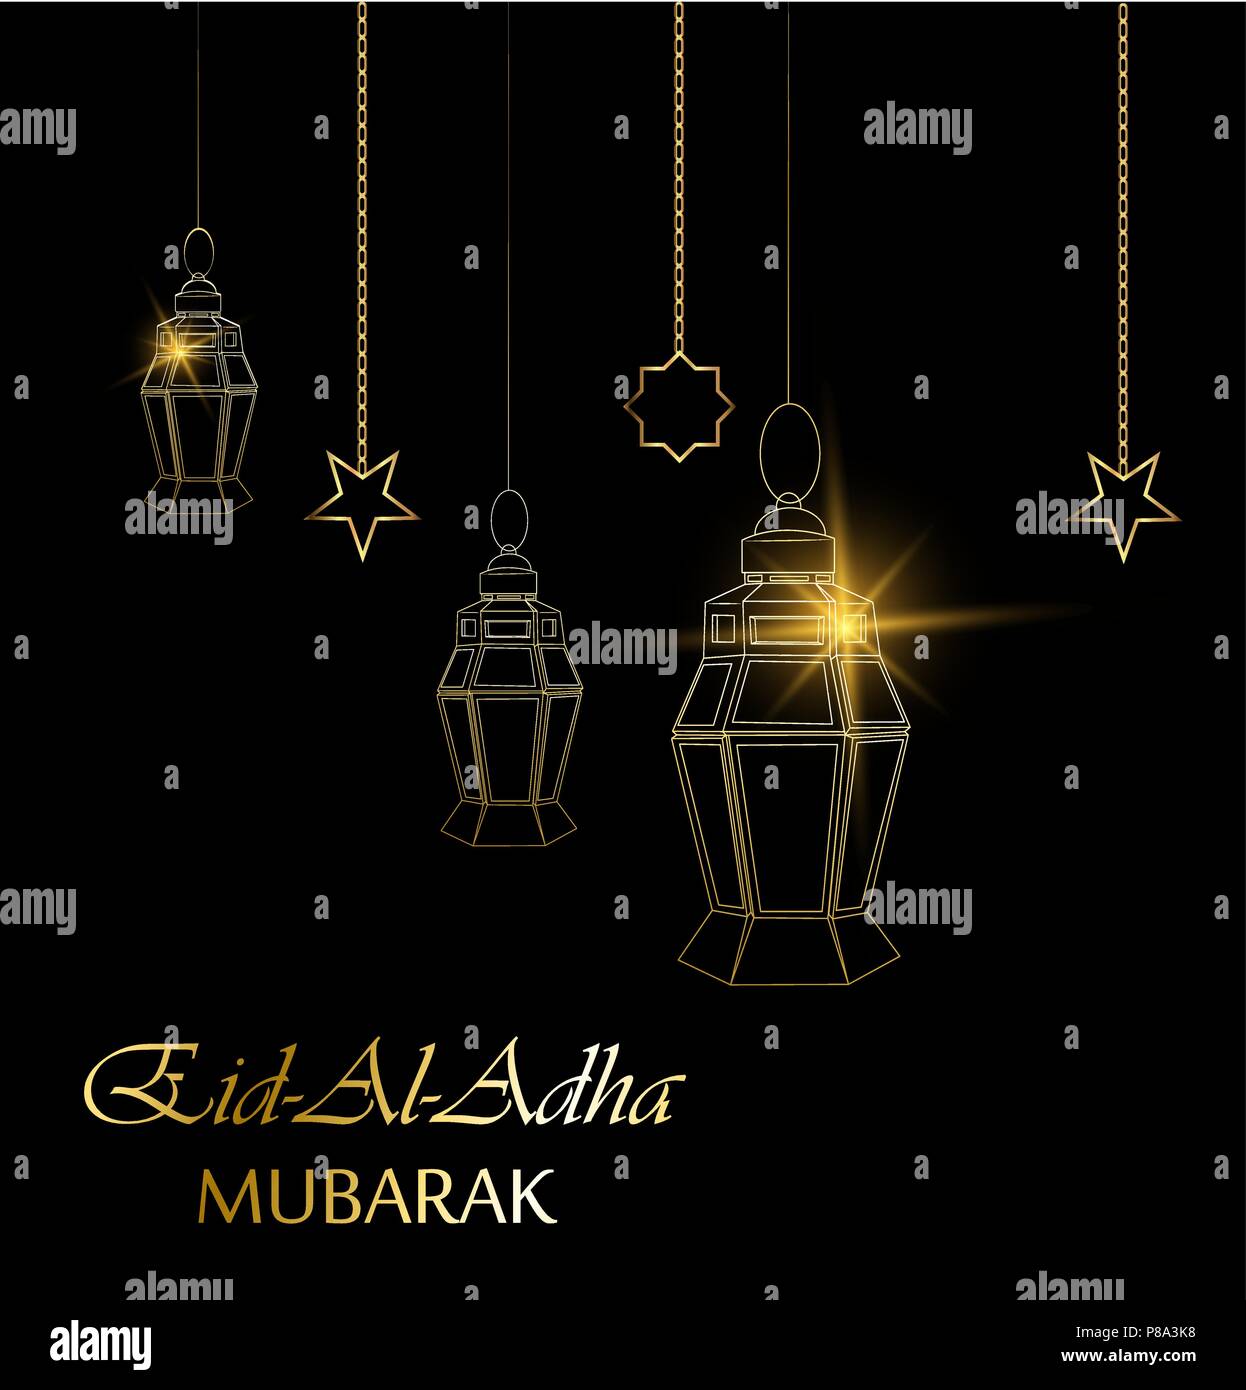 Eid al adha beautiful greeting card with hanging lanterns, moon and stars on black background. Muslim traditional holiday Kurban Bayram. Vector. Stock Vector